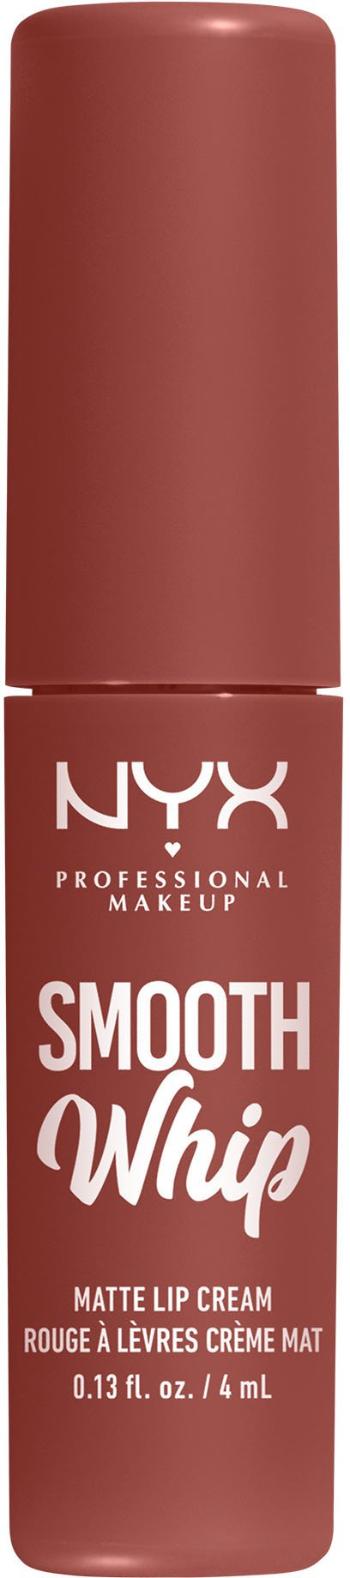 NYX Professional Makeup Smooth Whip Matte Lip Cream 03 Late Foam matný tekutý rúž, 4 ml